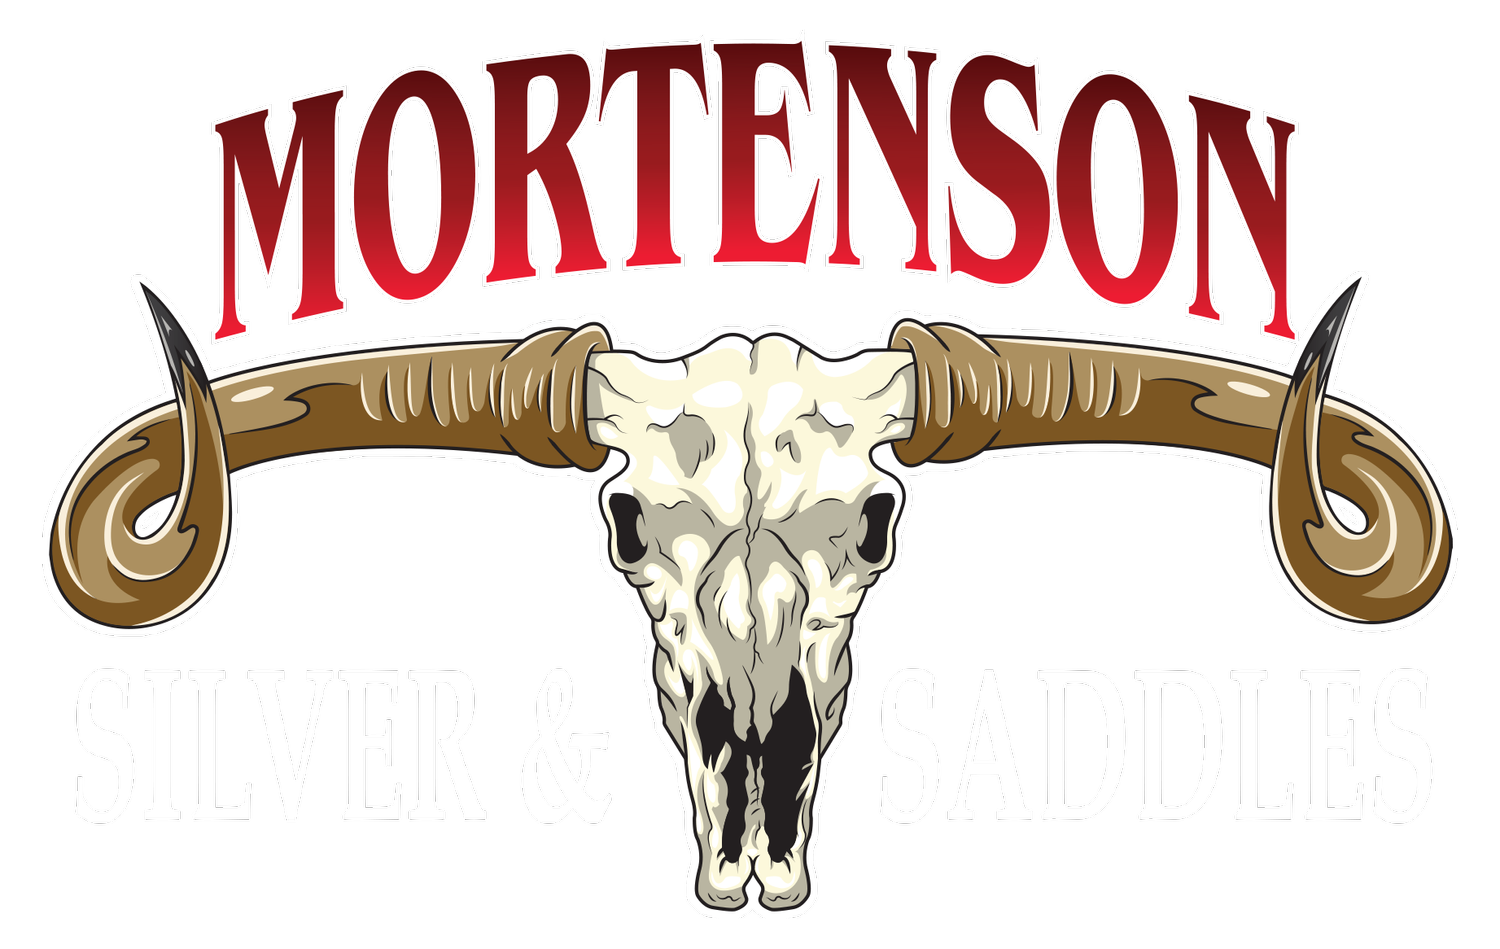 Mortenson Silver and Saddles, Santa Fe